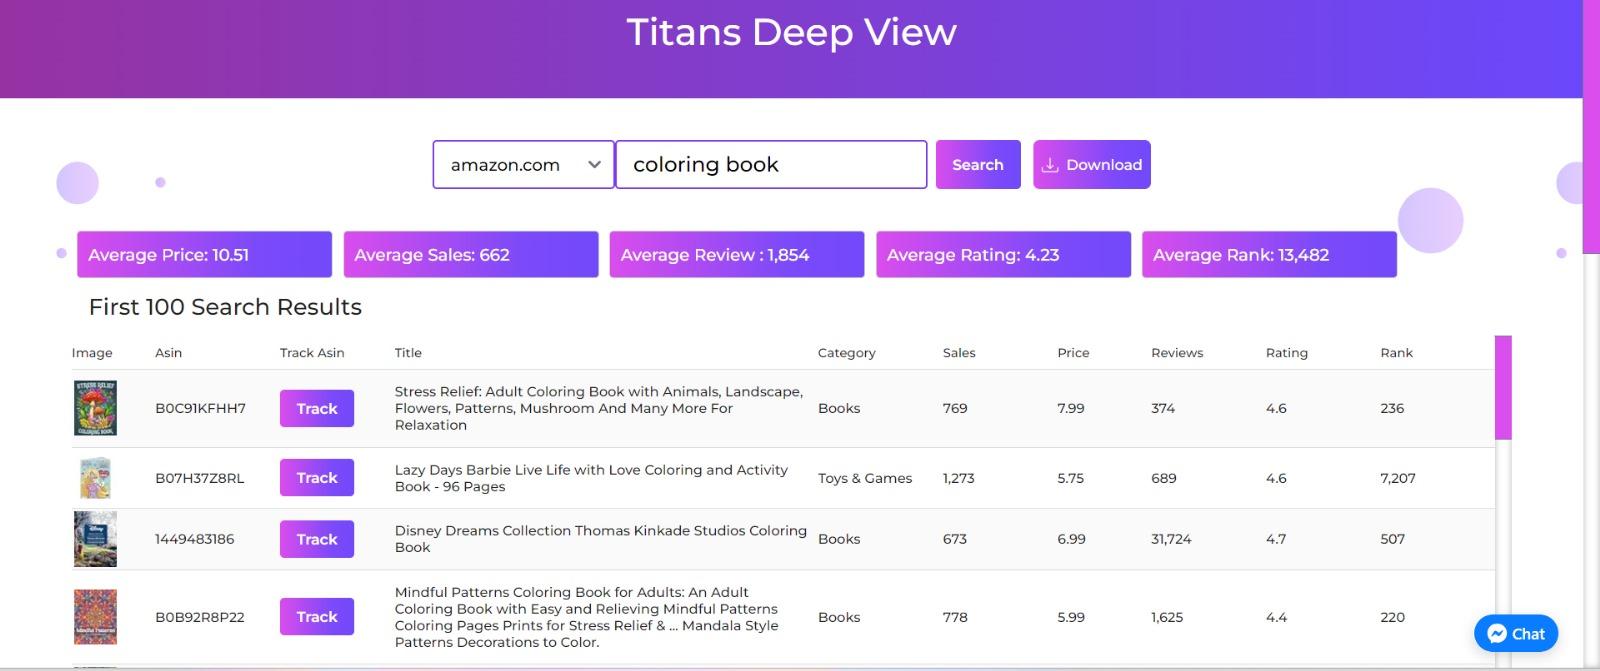 Titans Deep View